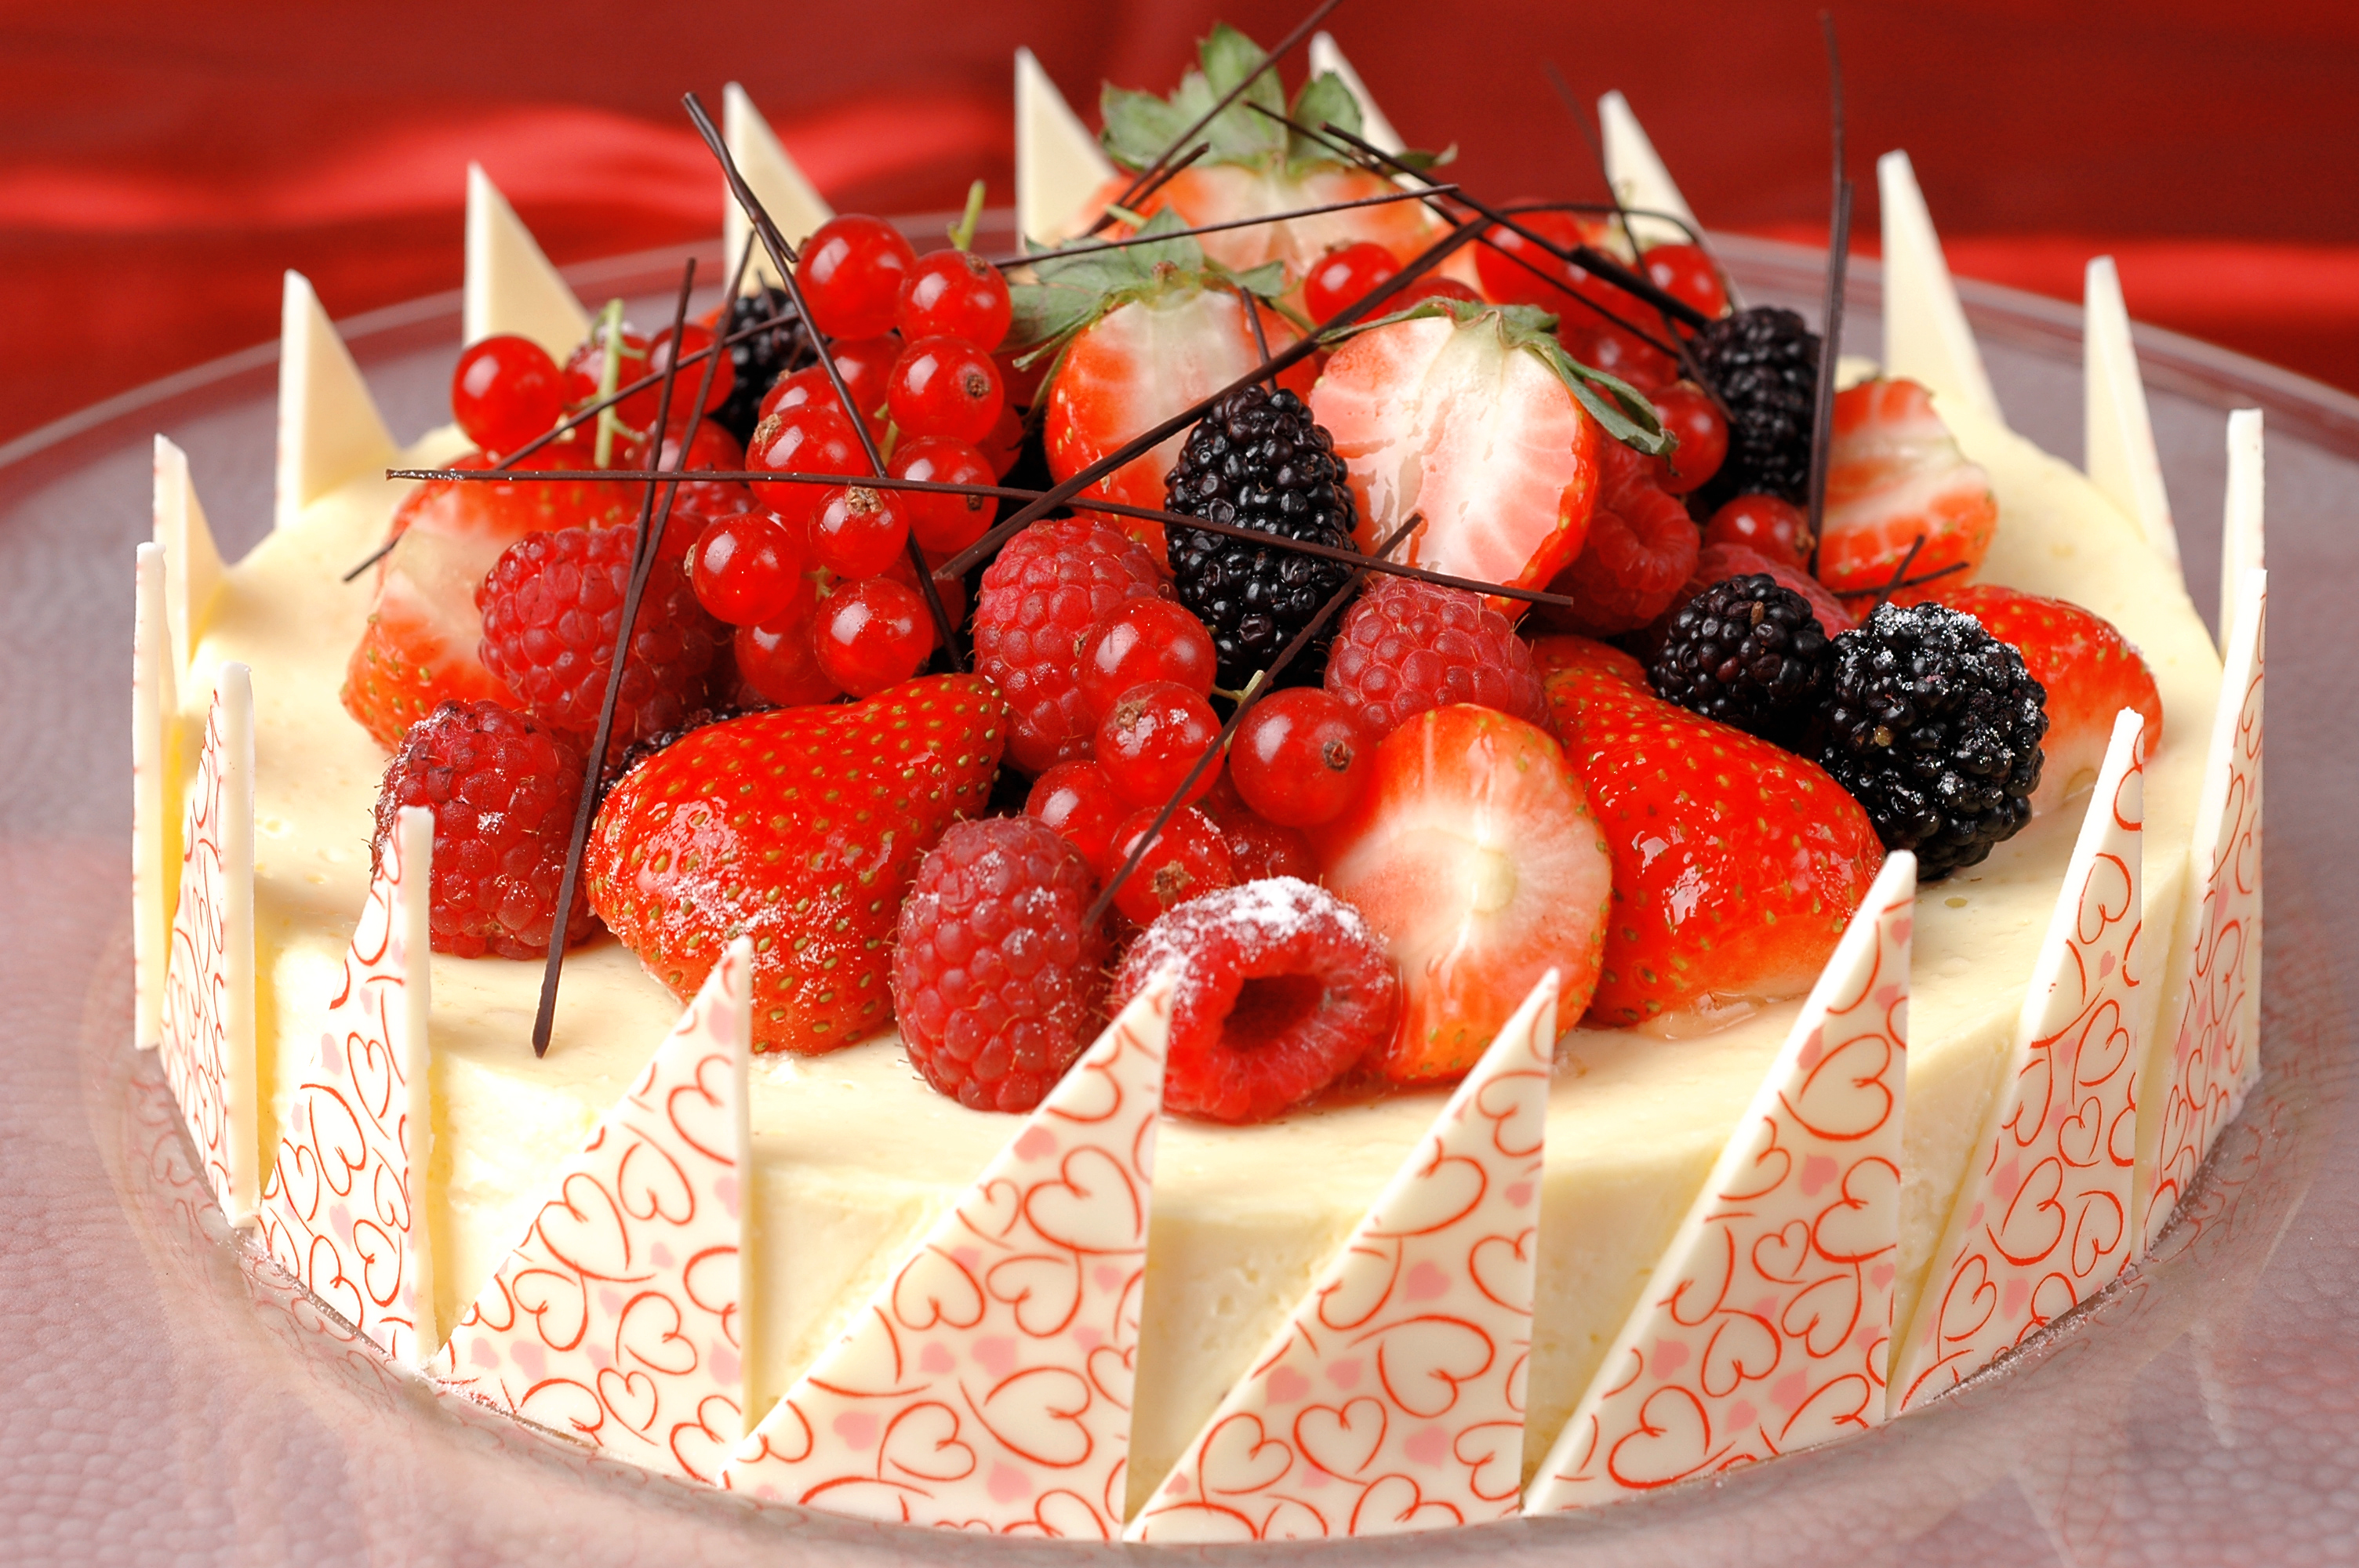 File:chezze Cake..so Yummy - Flickr - Don Naked.jpg - Wikimedia Commons